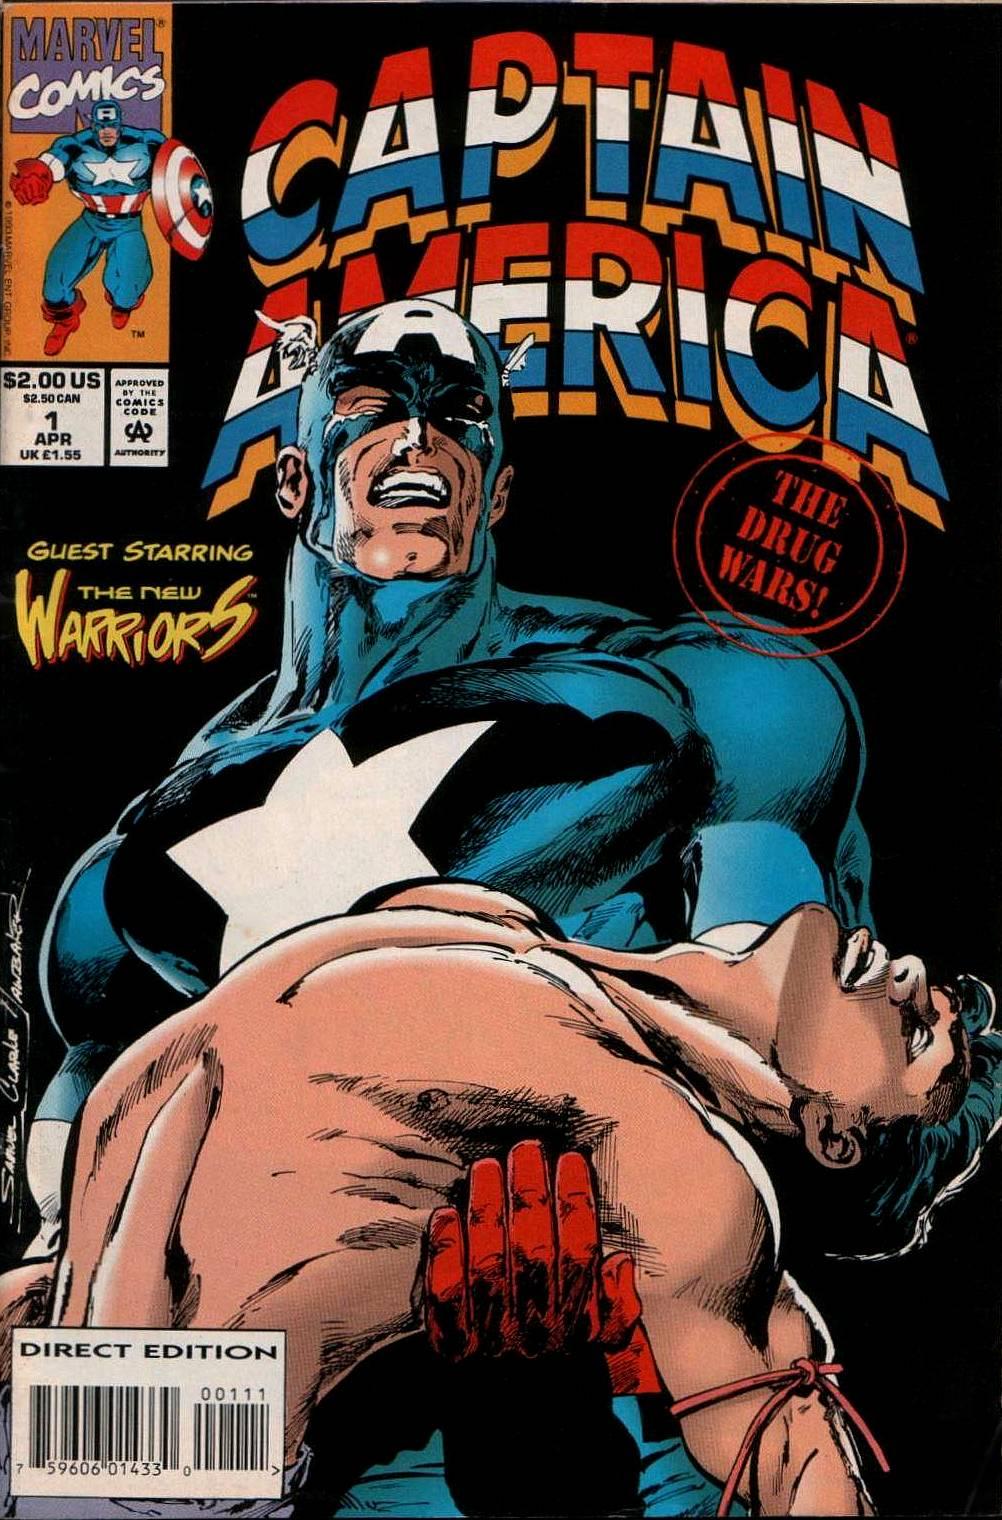 Captain America Drug War Vol. 1 #1